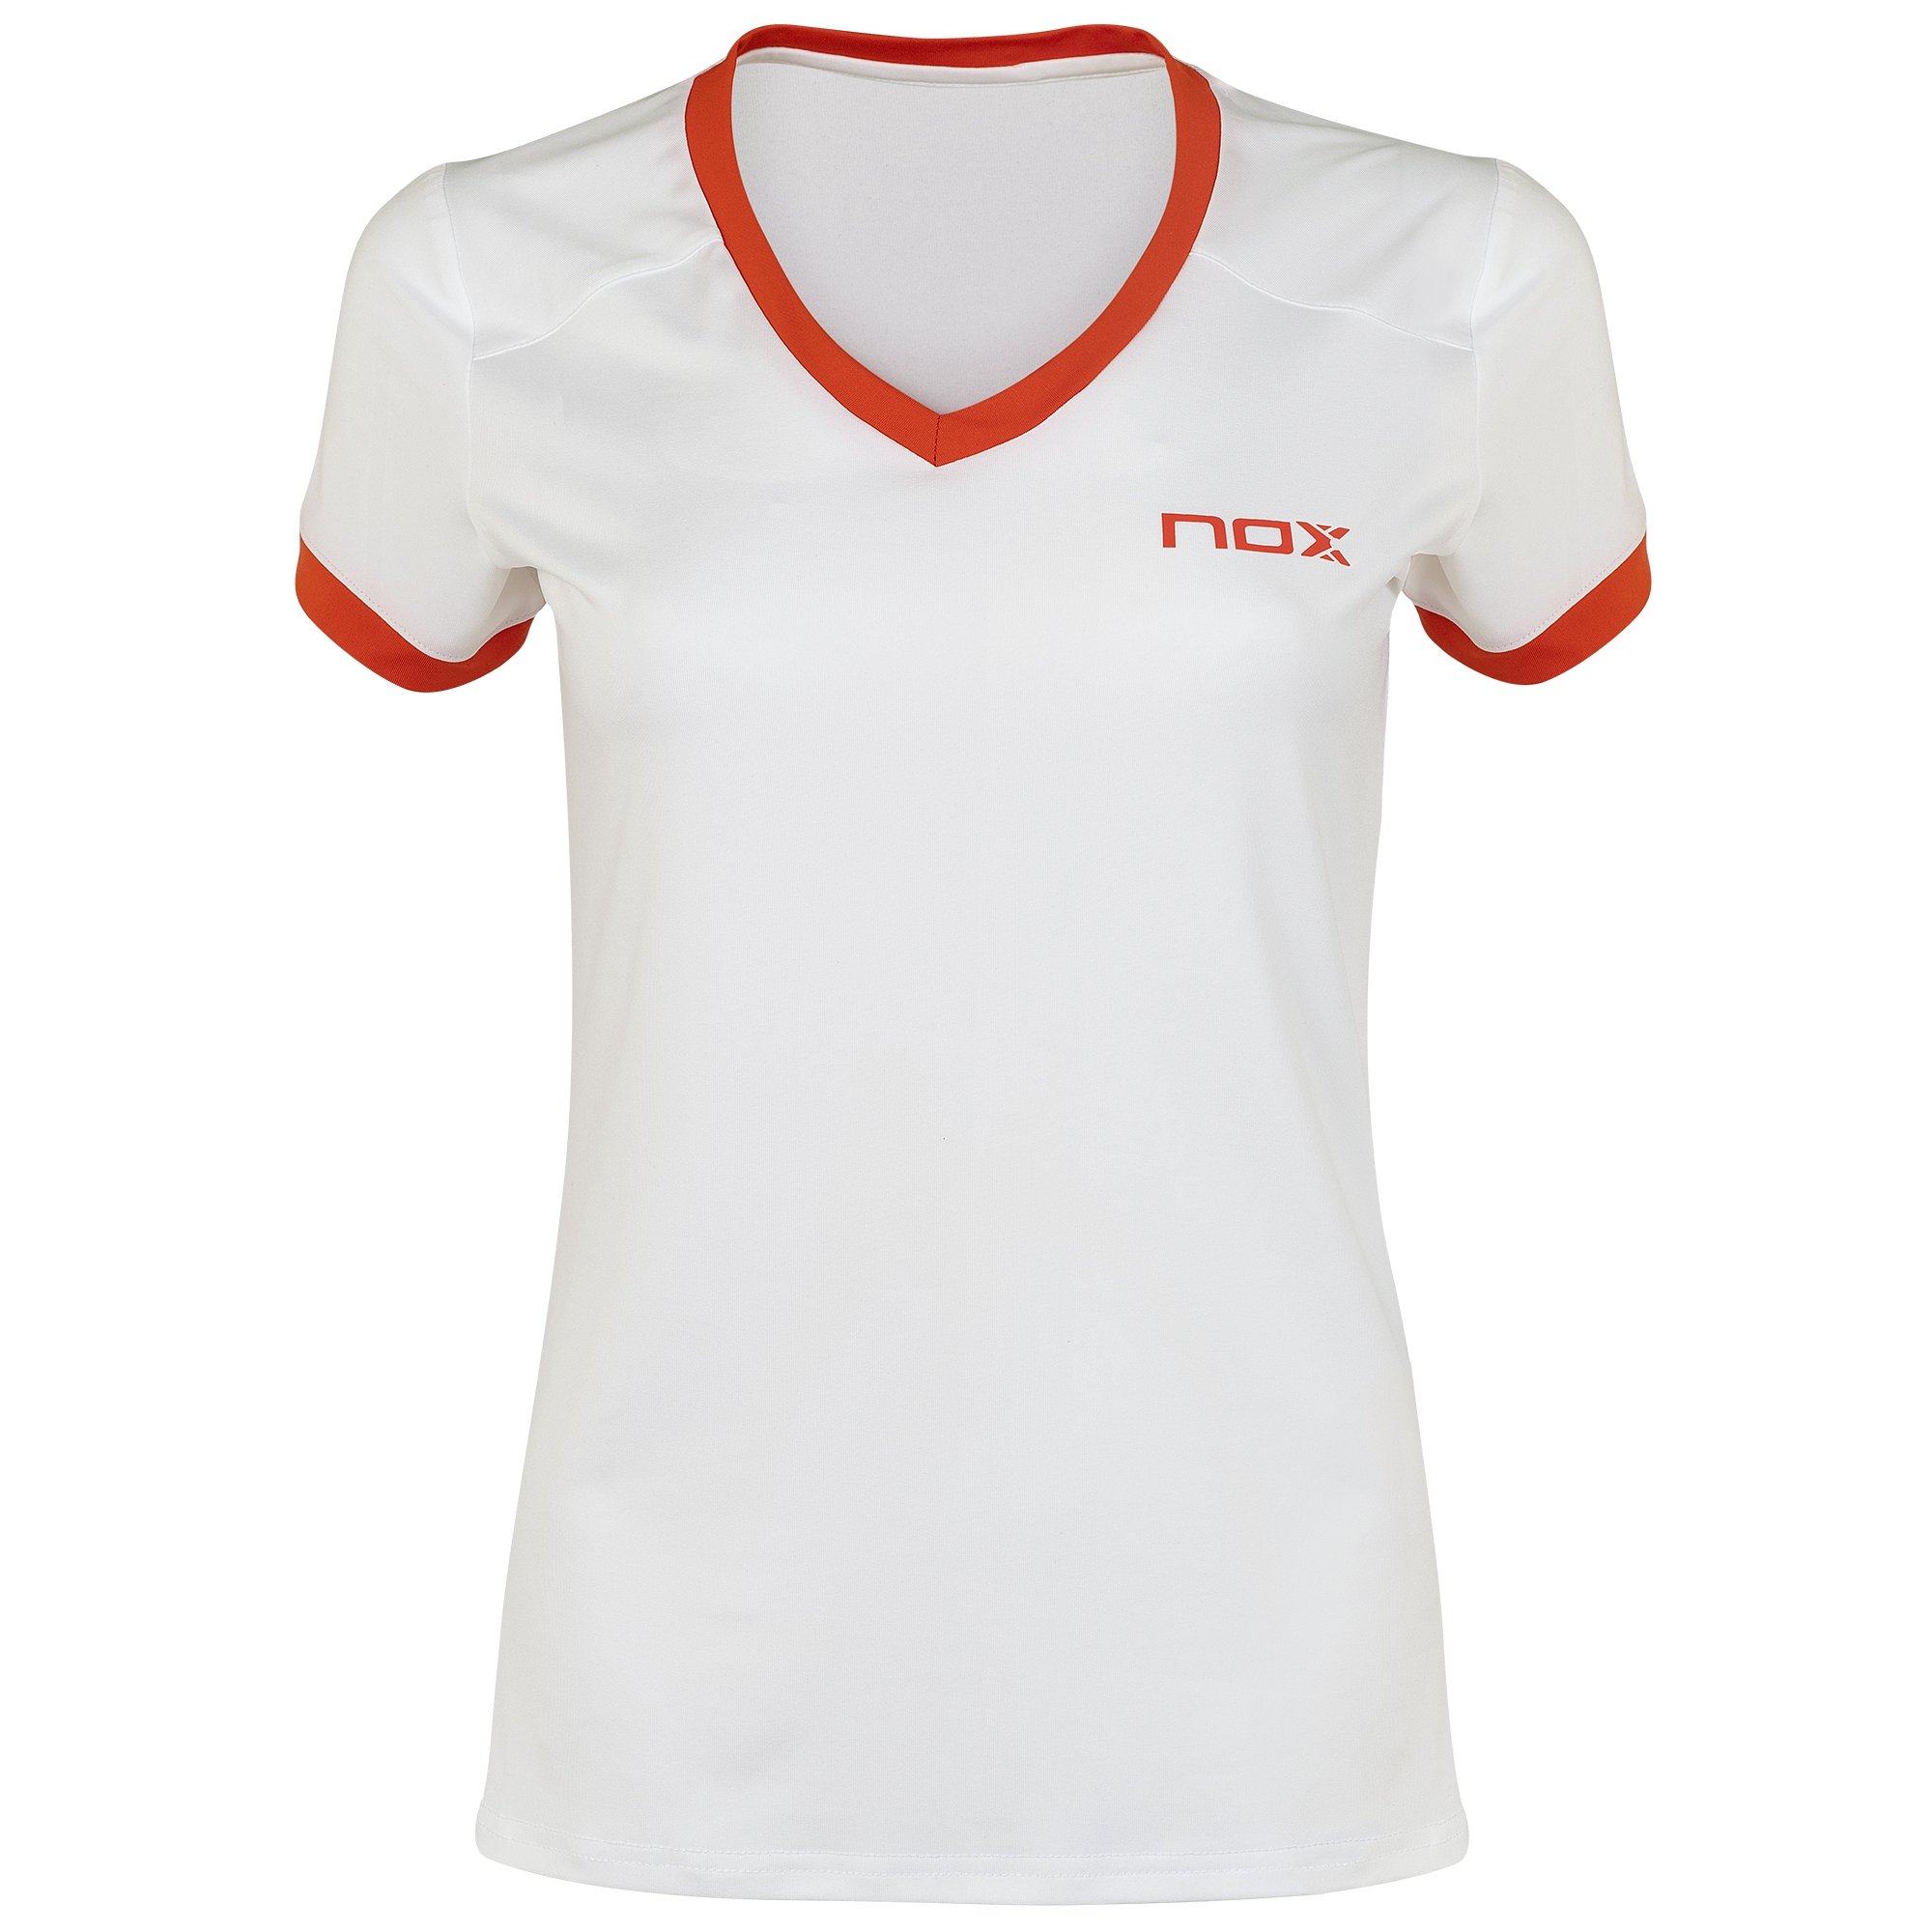 Camiseta Nox Mujer Team Blanca